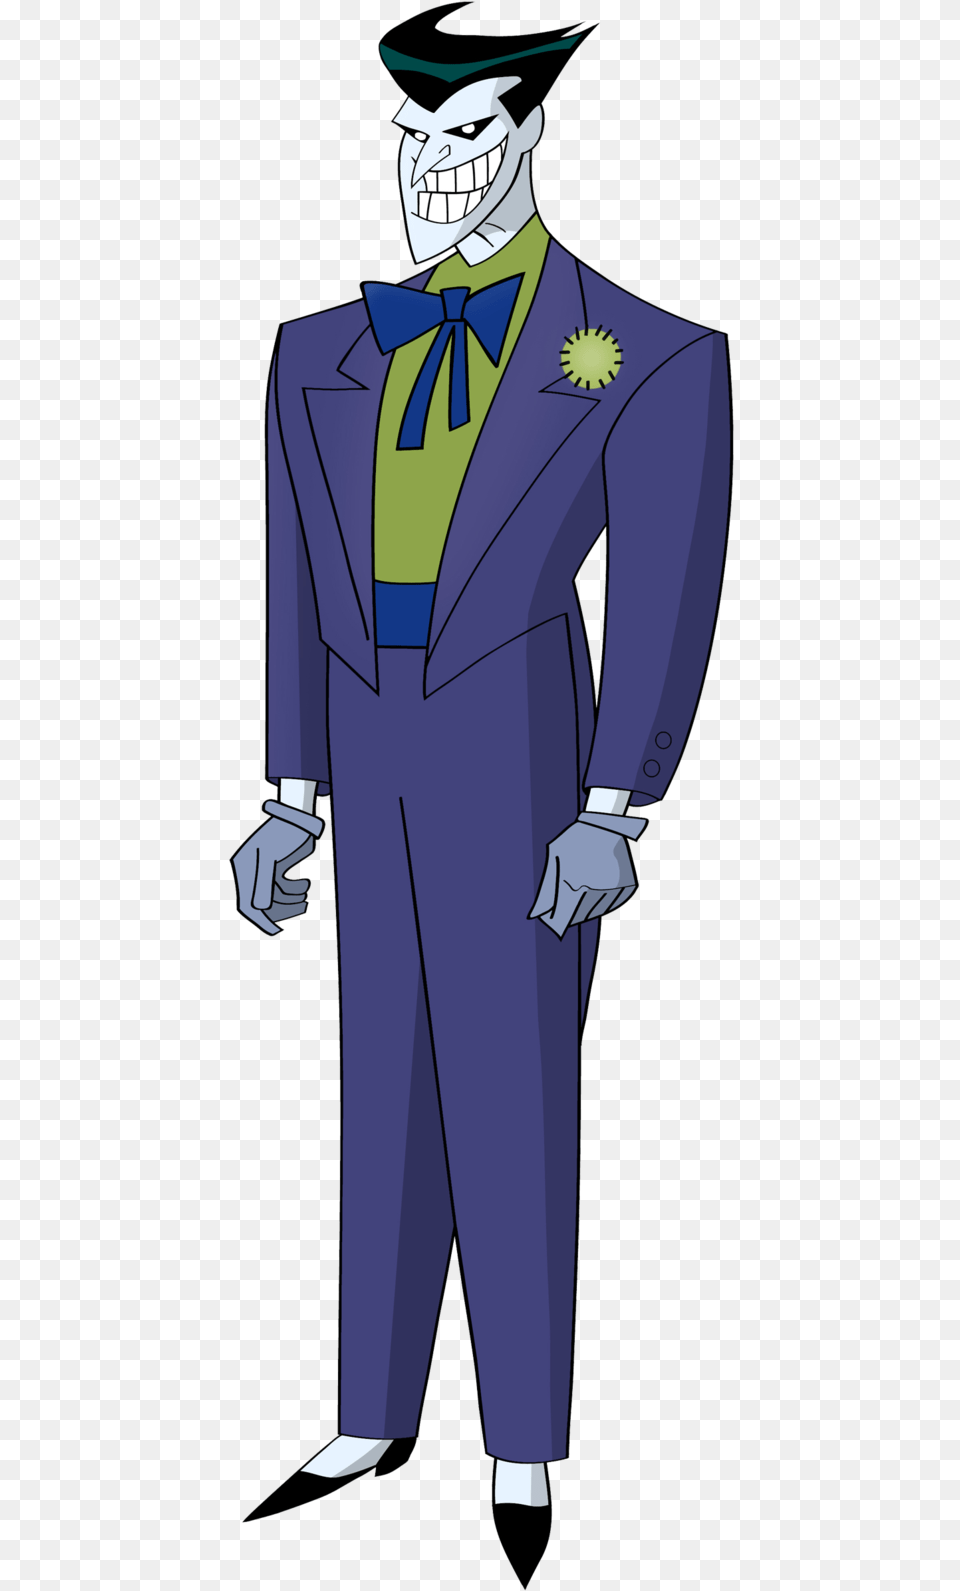 Joker Batman The Animated Series Joker Change, Tuxedo, Clothing, Suit, Formal Wear Png Image